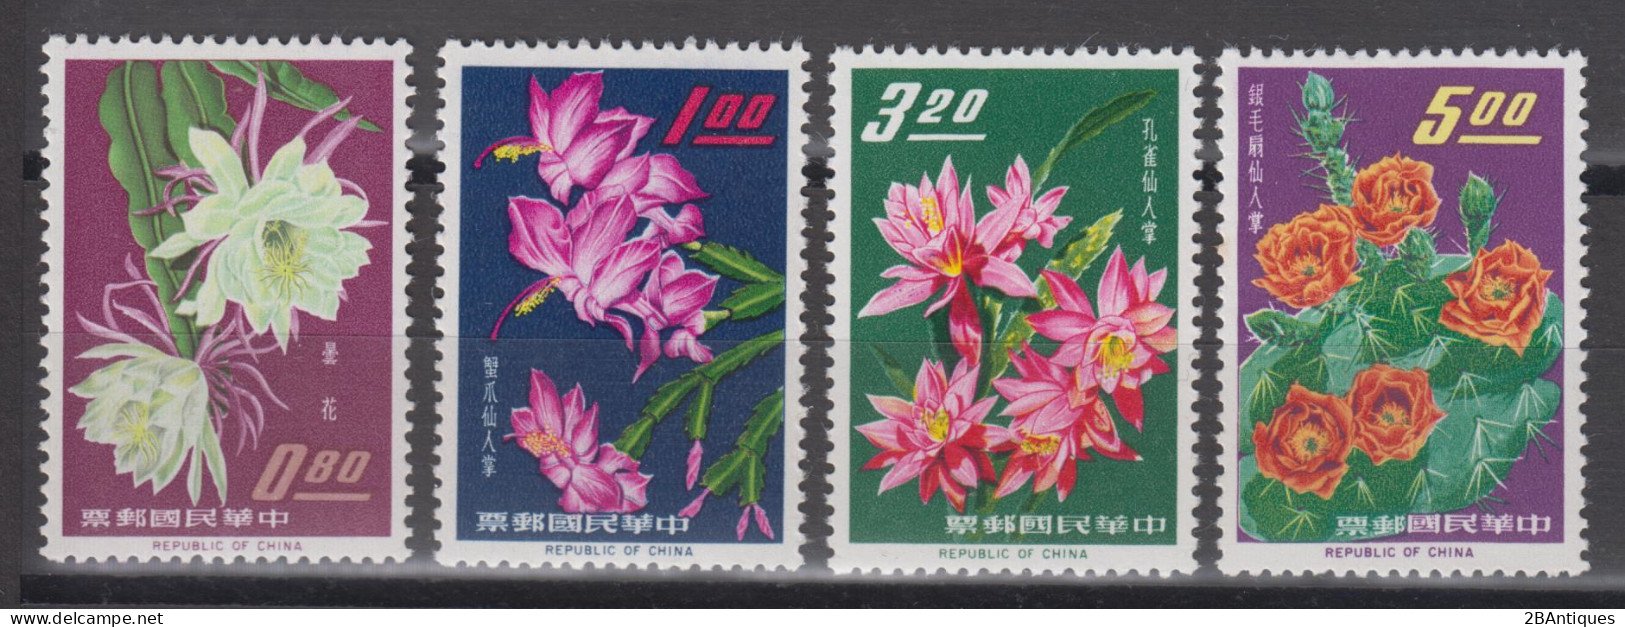 TAIWAN 1964 - Taiwan Cacti MNH** OG - Unused Stamps